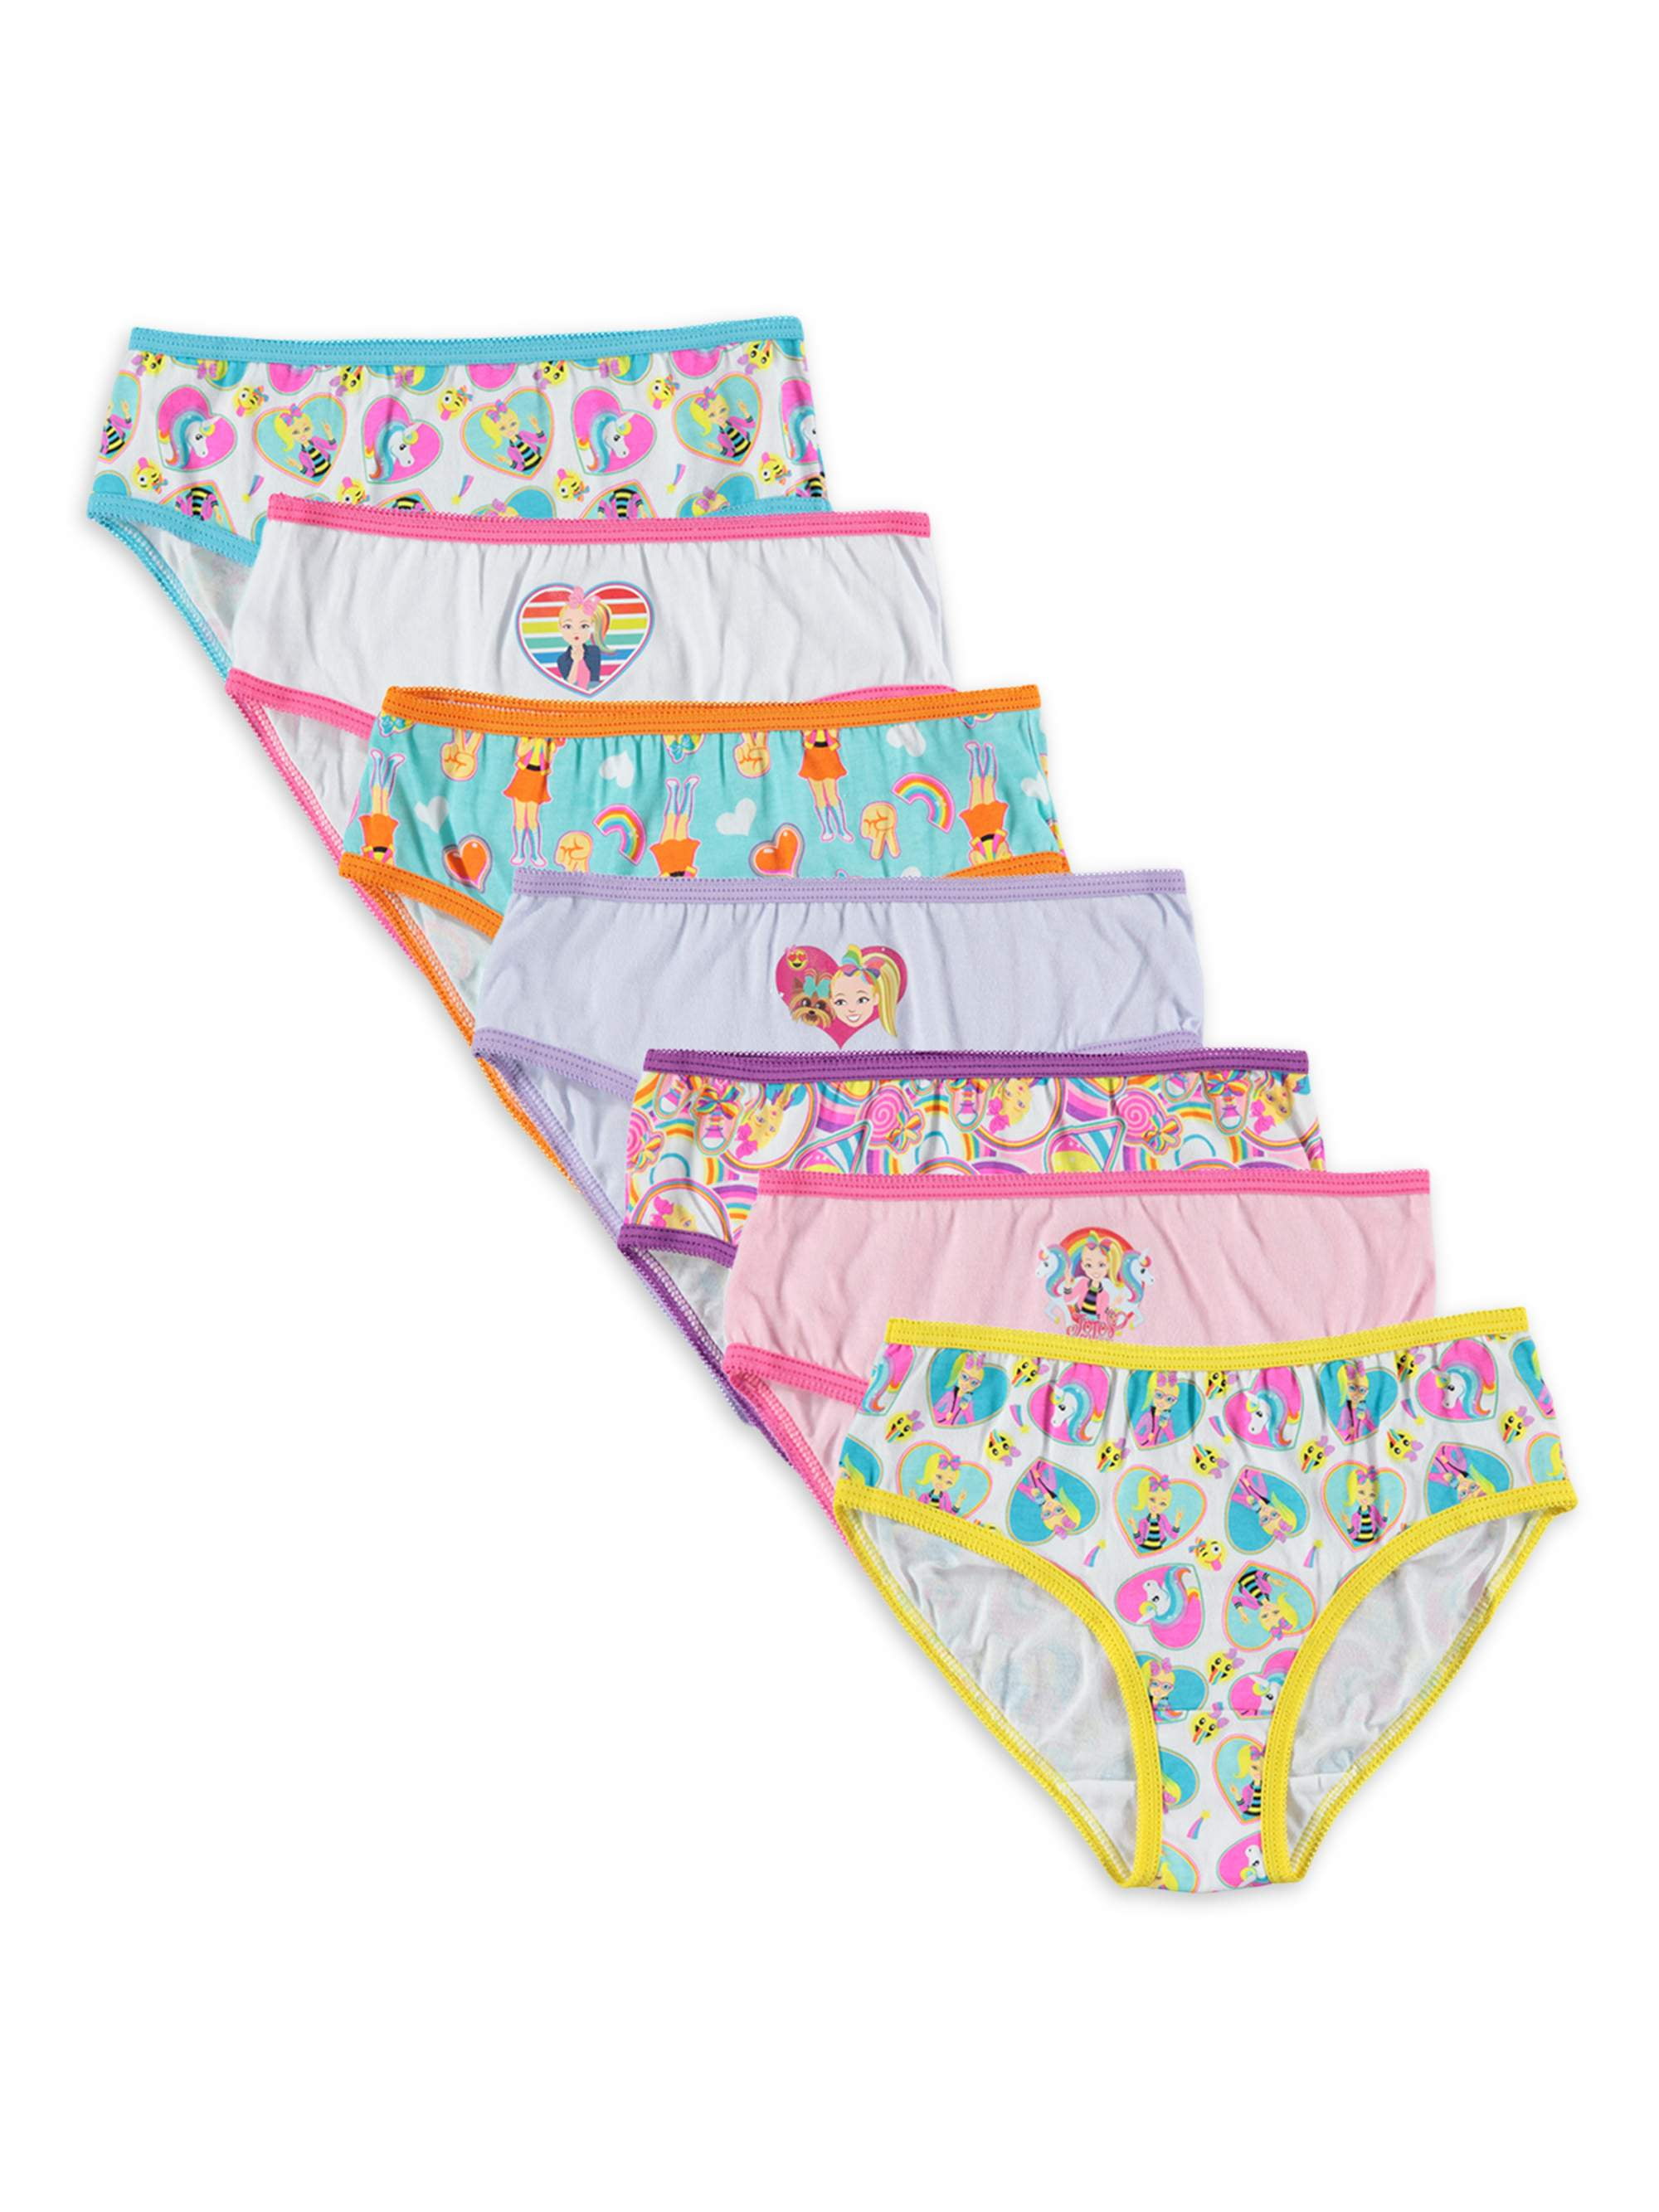 Peppa Pig Underwear Underpants 3pr 7pr Panty Pk Girls 4 6 8 New 